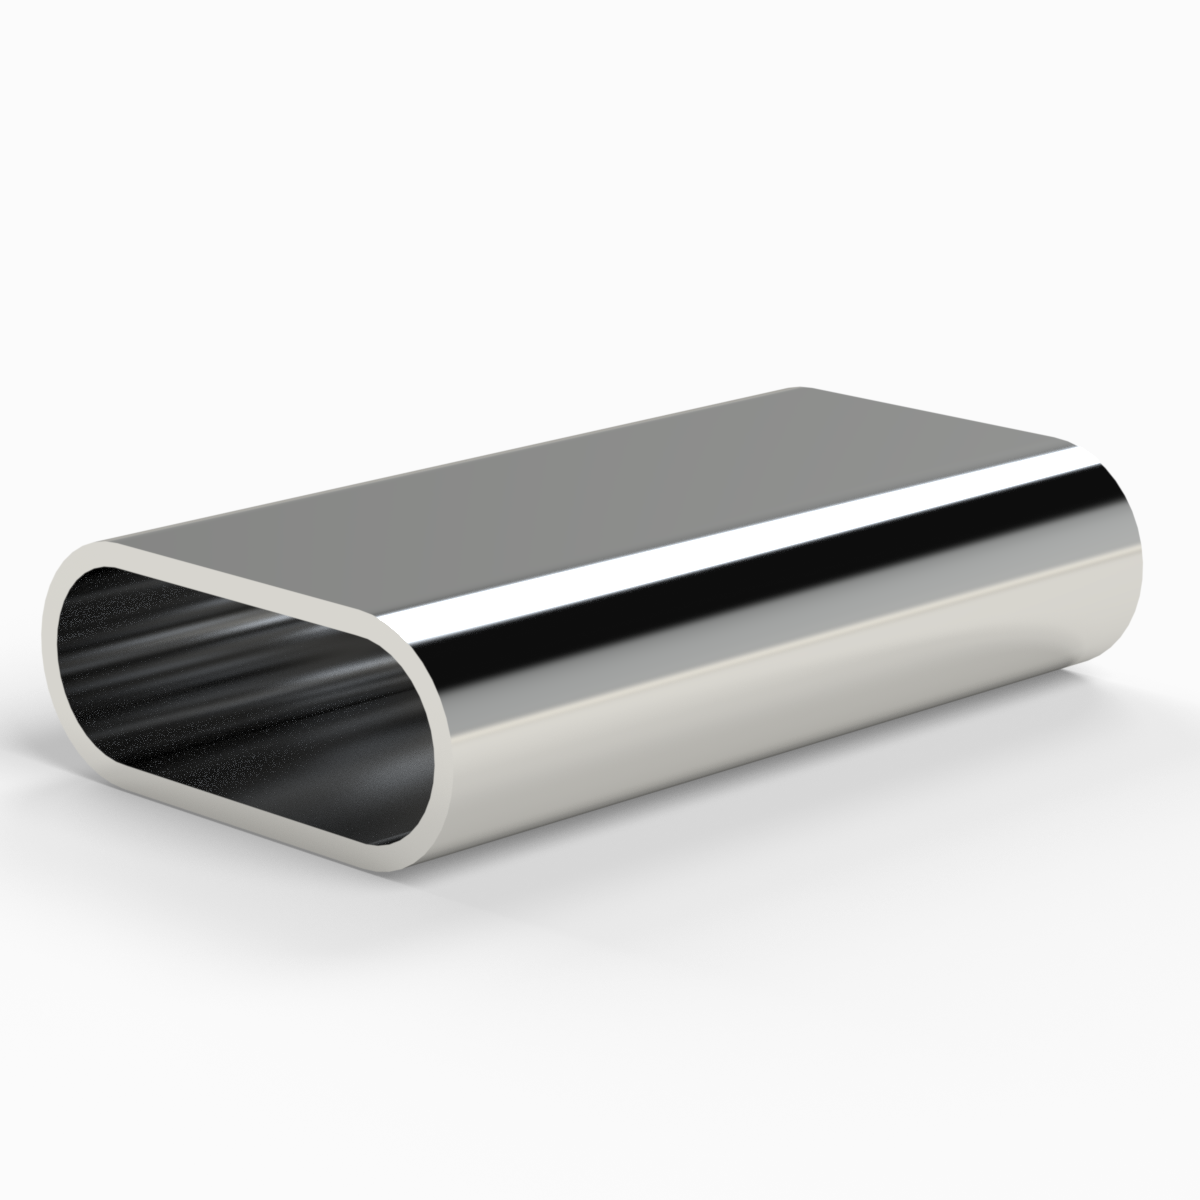 Tube ovale en aluminium Ø 30 x 18,5 x 2,25 mm longueur au choix aluminium  AlMgSi05 profil de montre en aluminium 